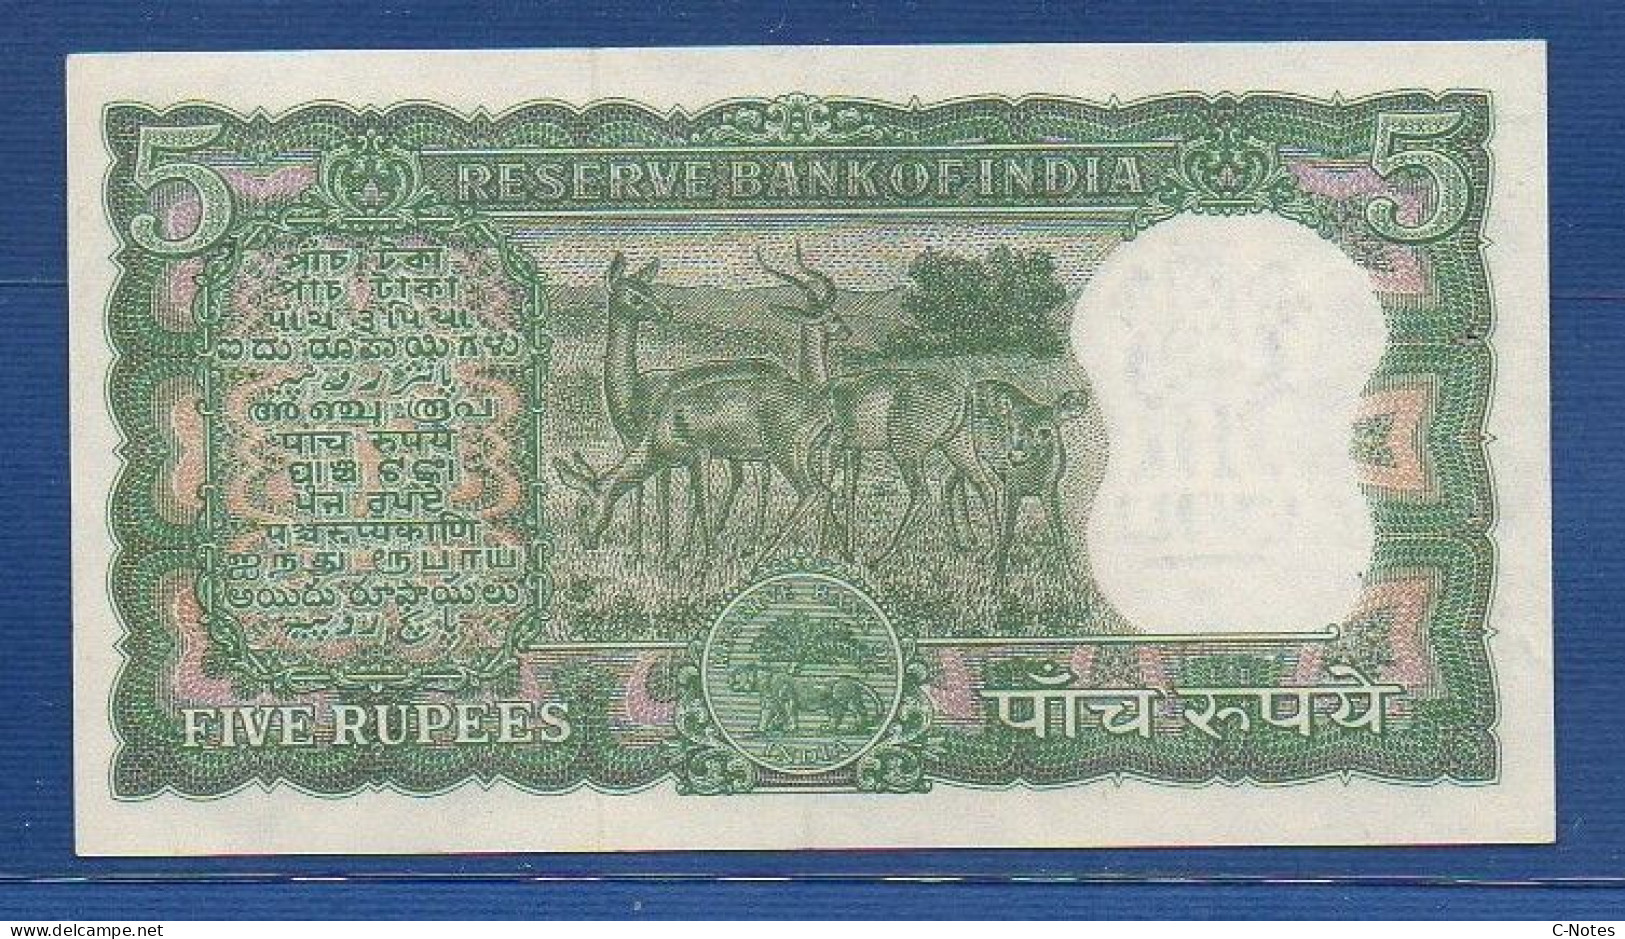 INDIA - P. 54a – 5 Rupees ND, XF/aUNC,  Serie B87 963756 - Signature: Bhattacharya (1962-1967) - India